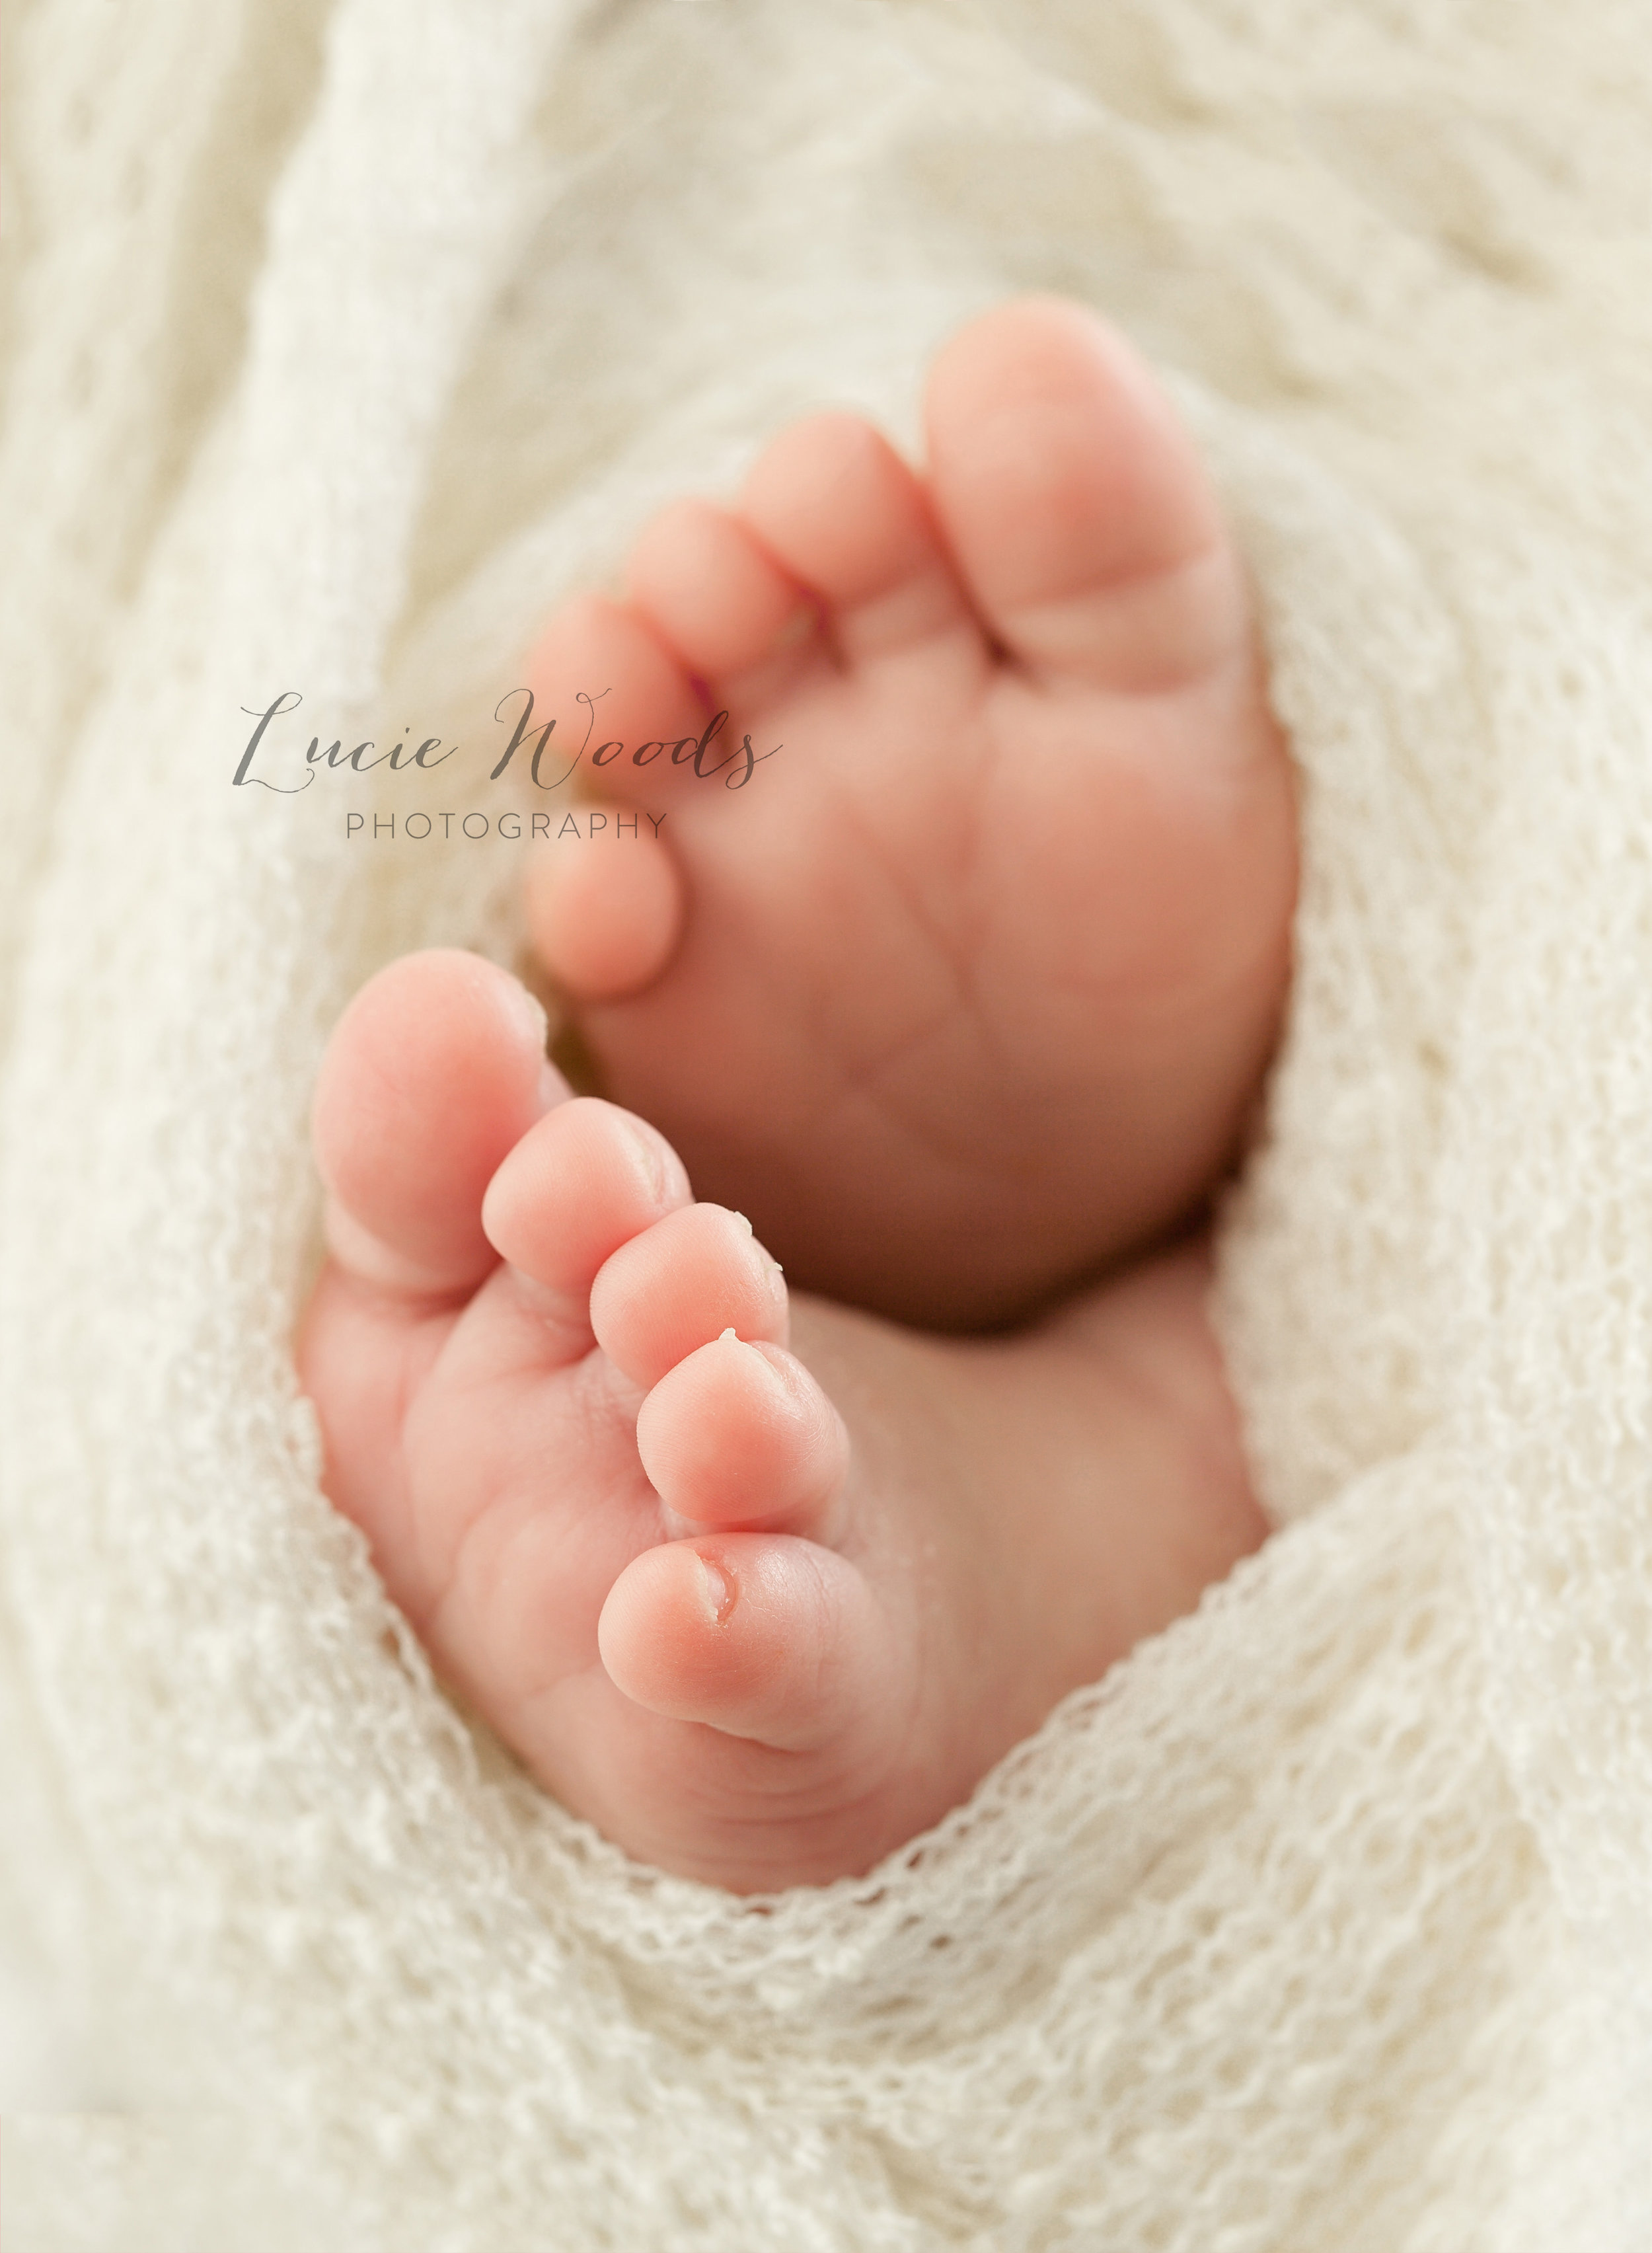 Newborn photographer baby photos photo Manchester Lancashire Ramsbottom Lucie Woods Photography